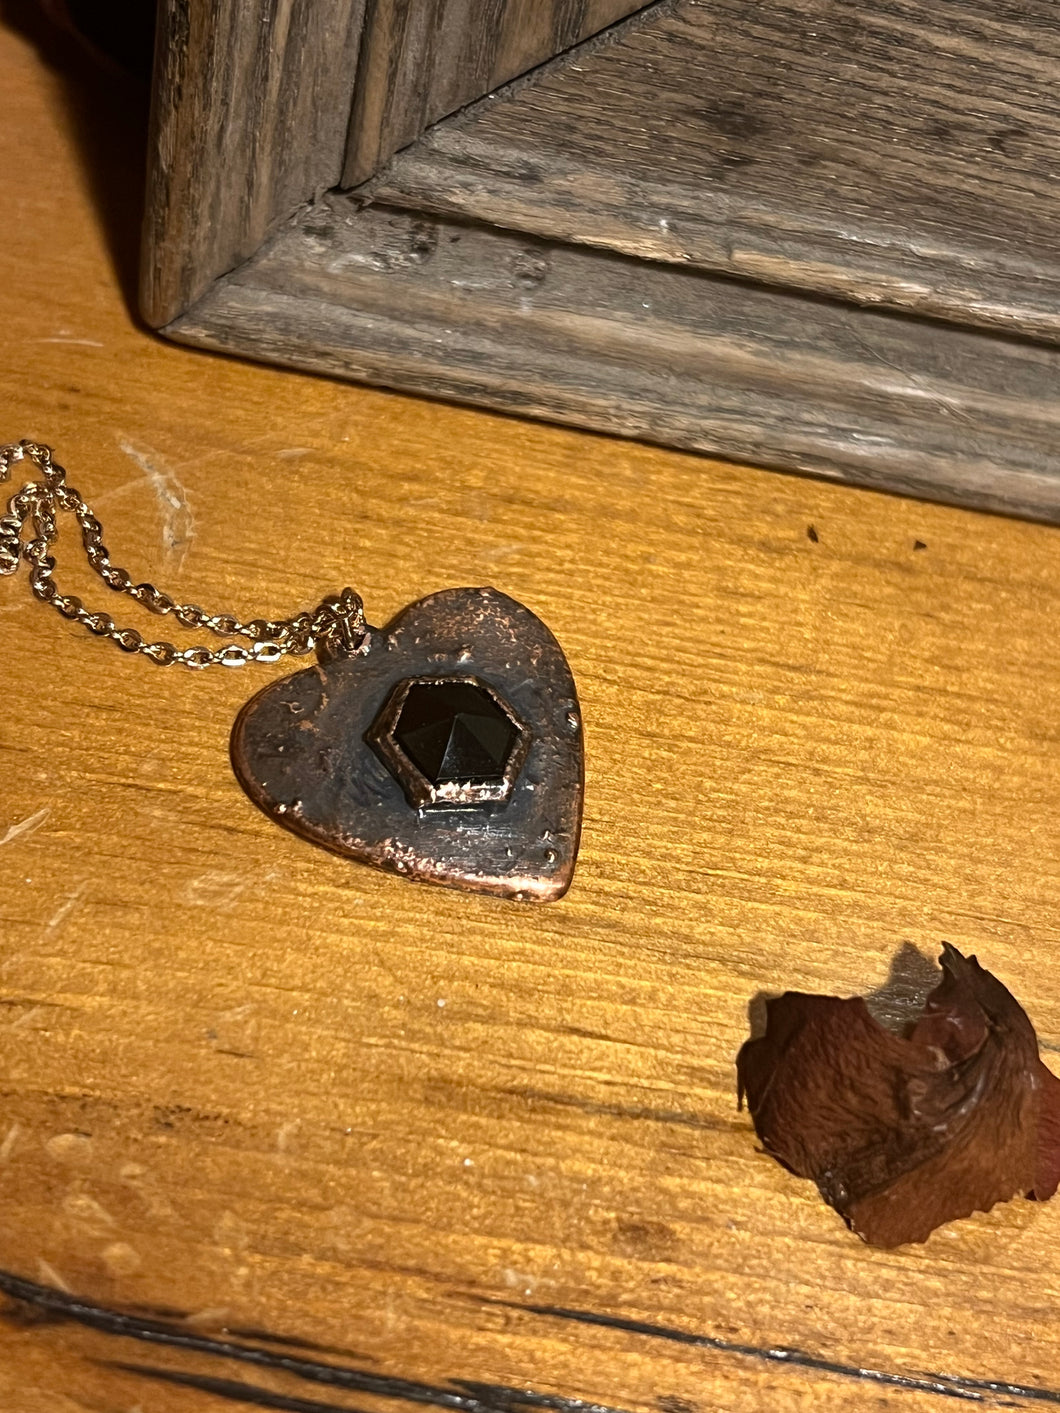 Onyx heart necklace